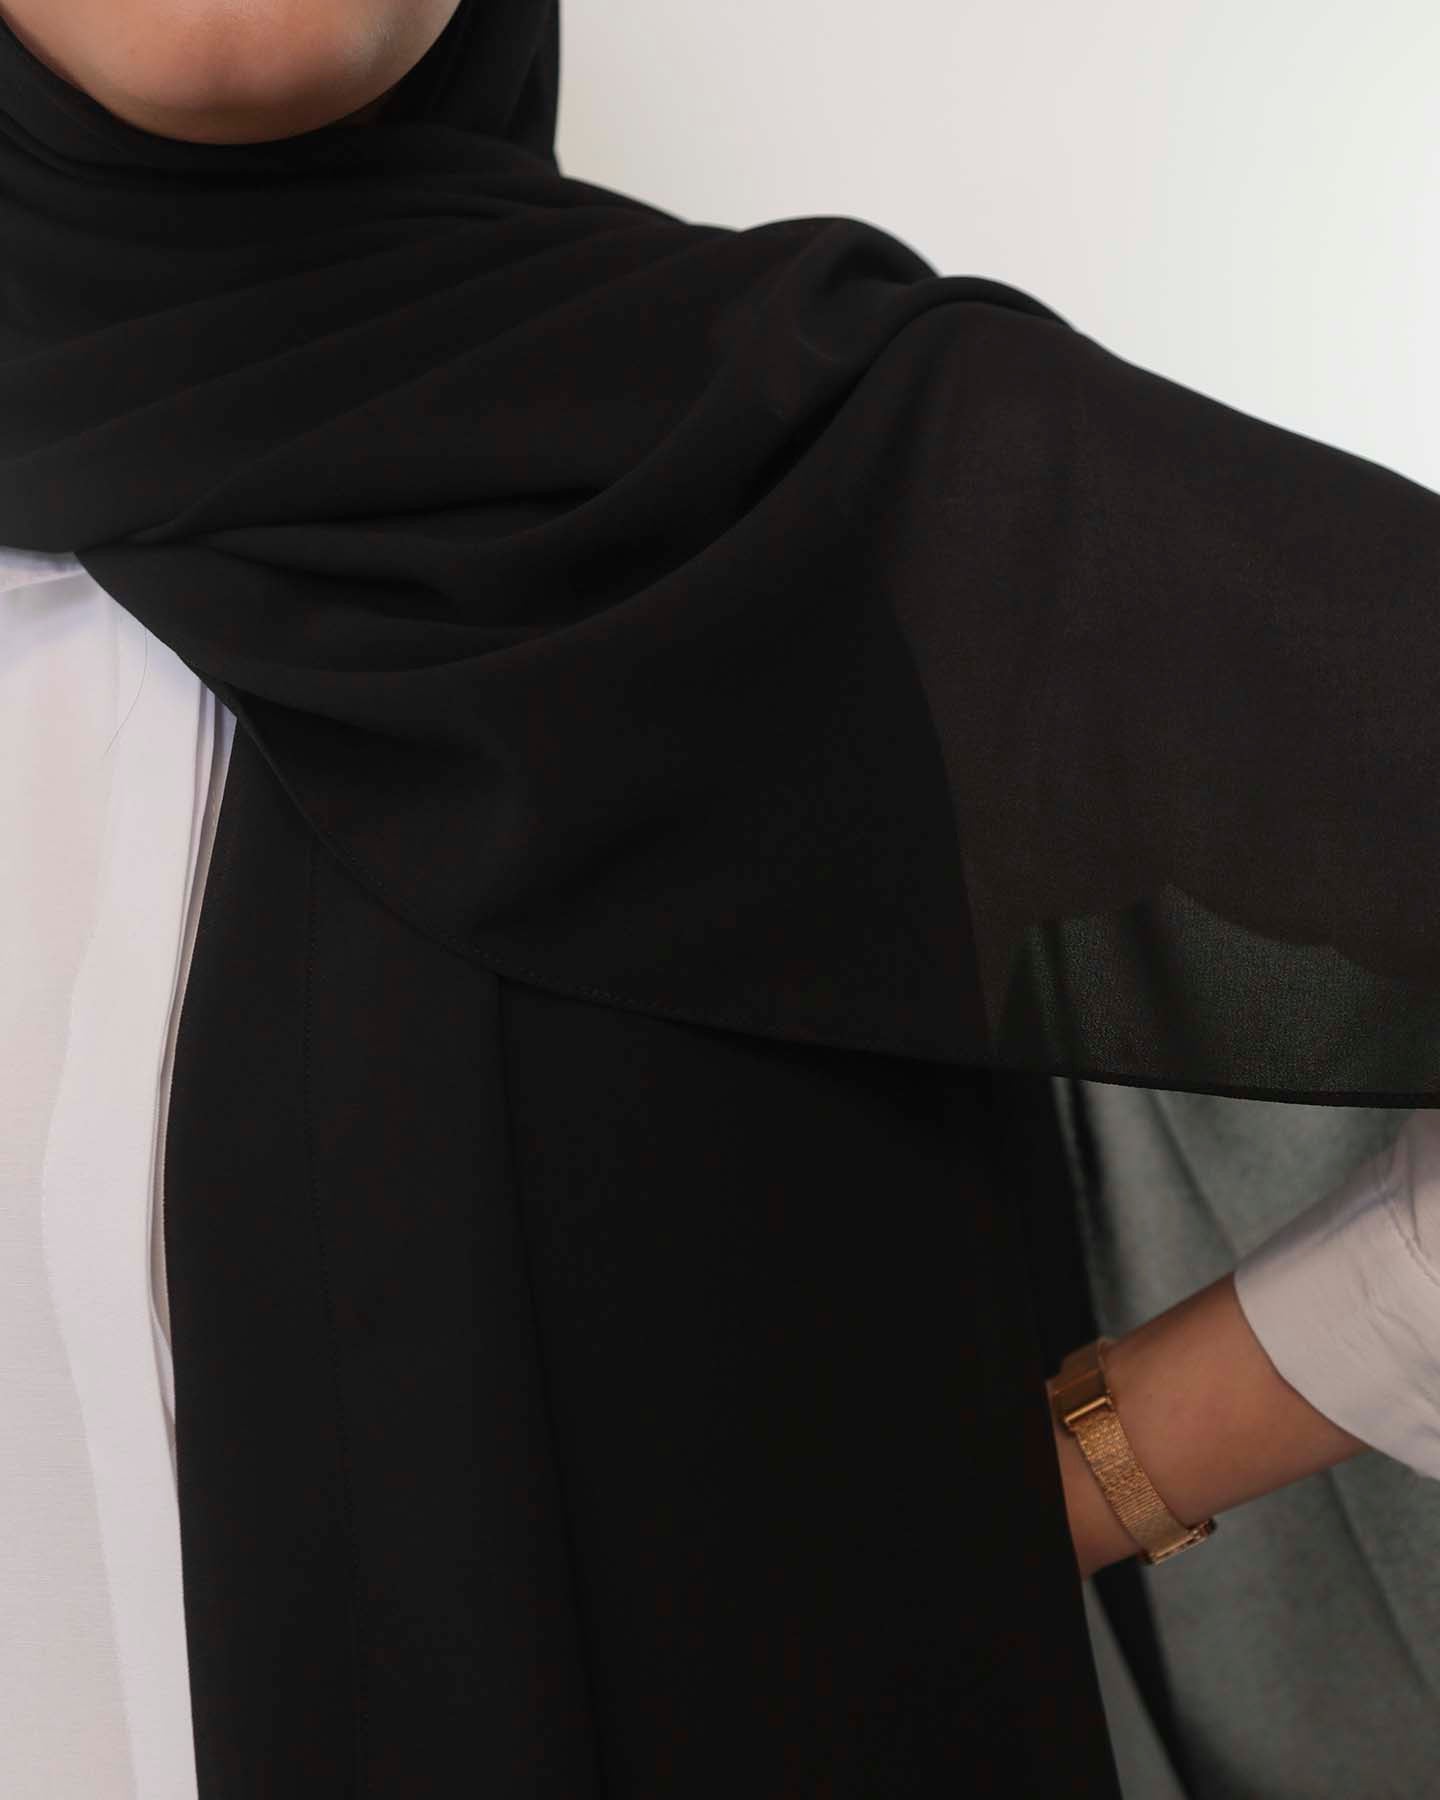 Premium Chiffon Hijab - Black